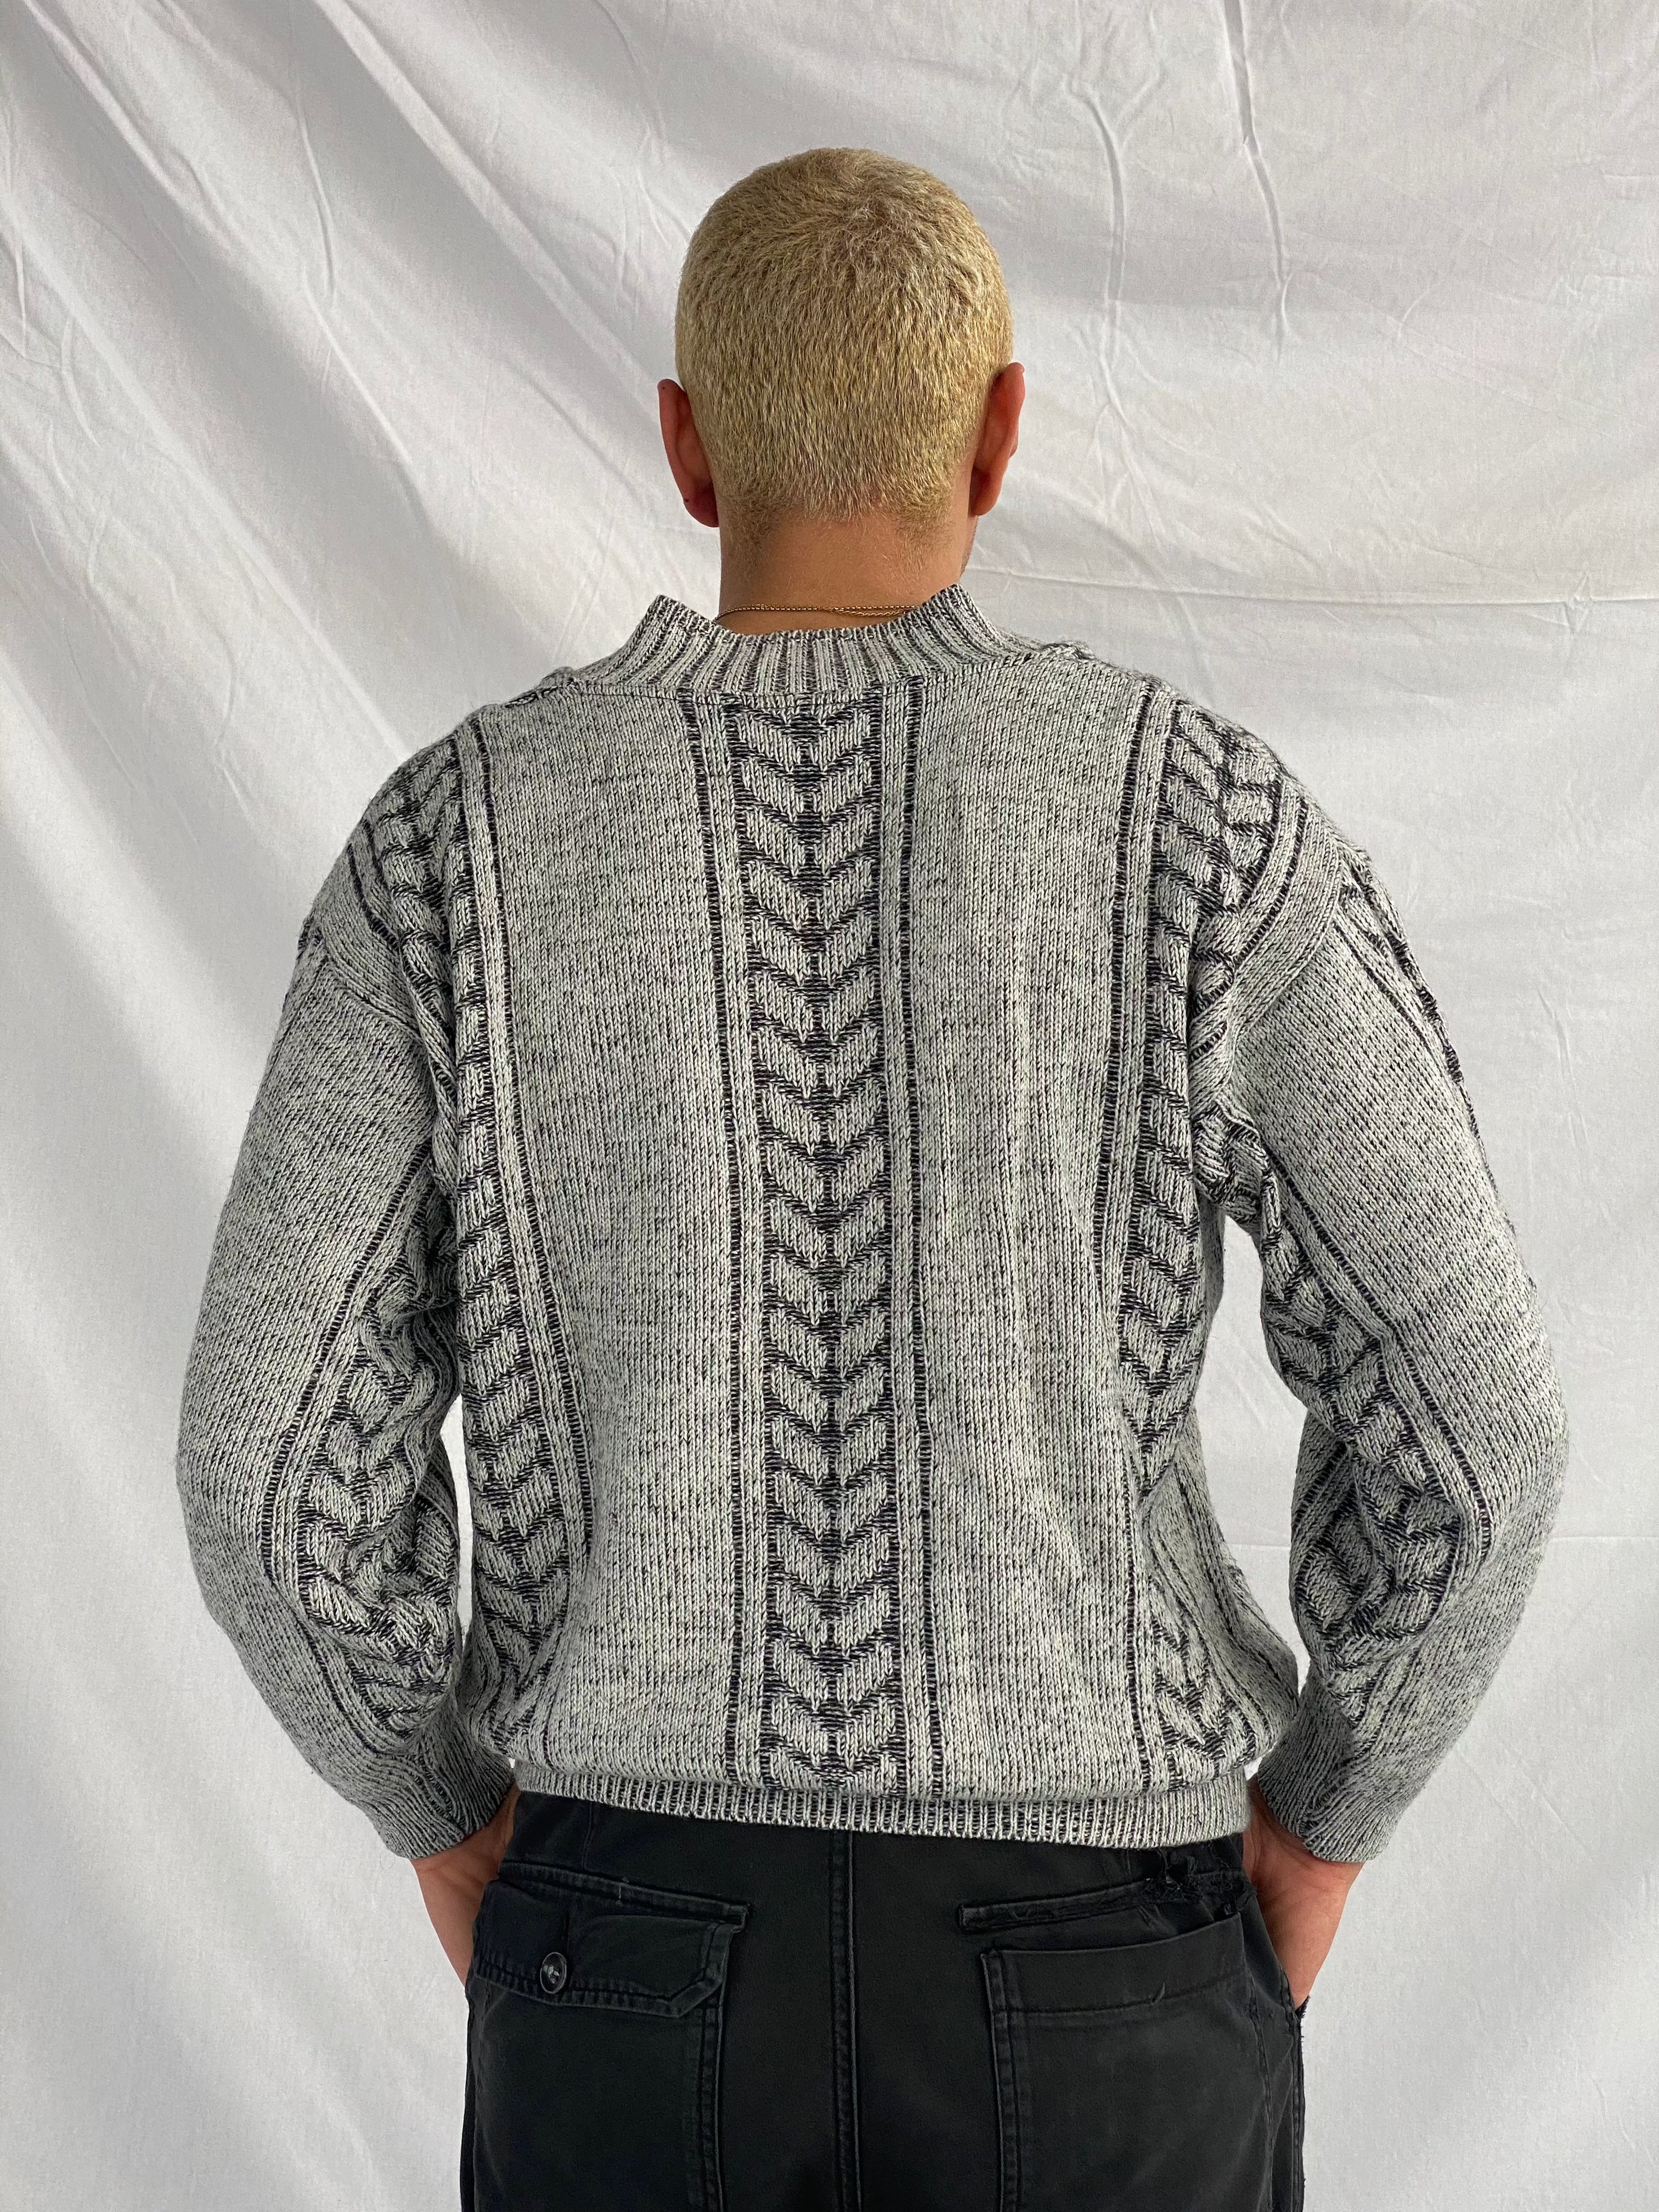 Vintage Knitted Sweater - Balagan Vintage Sweater 90s, knitted, knitted sweater, streetwear, vintage, vintage sweater, winter